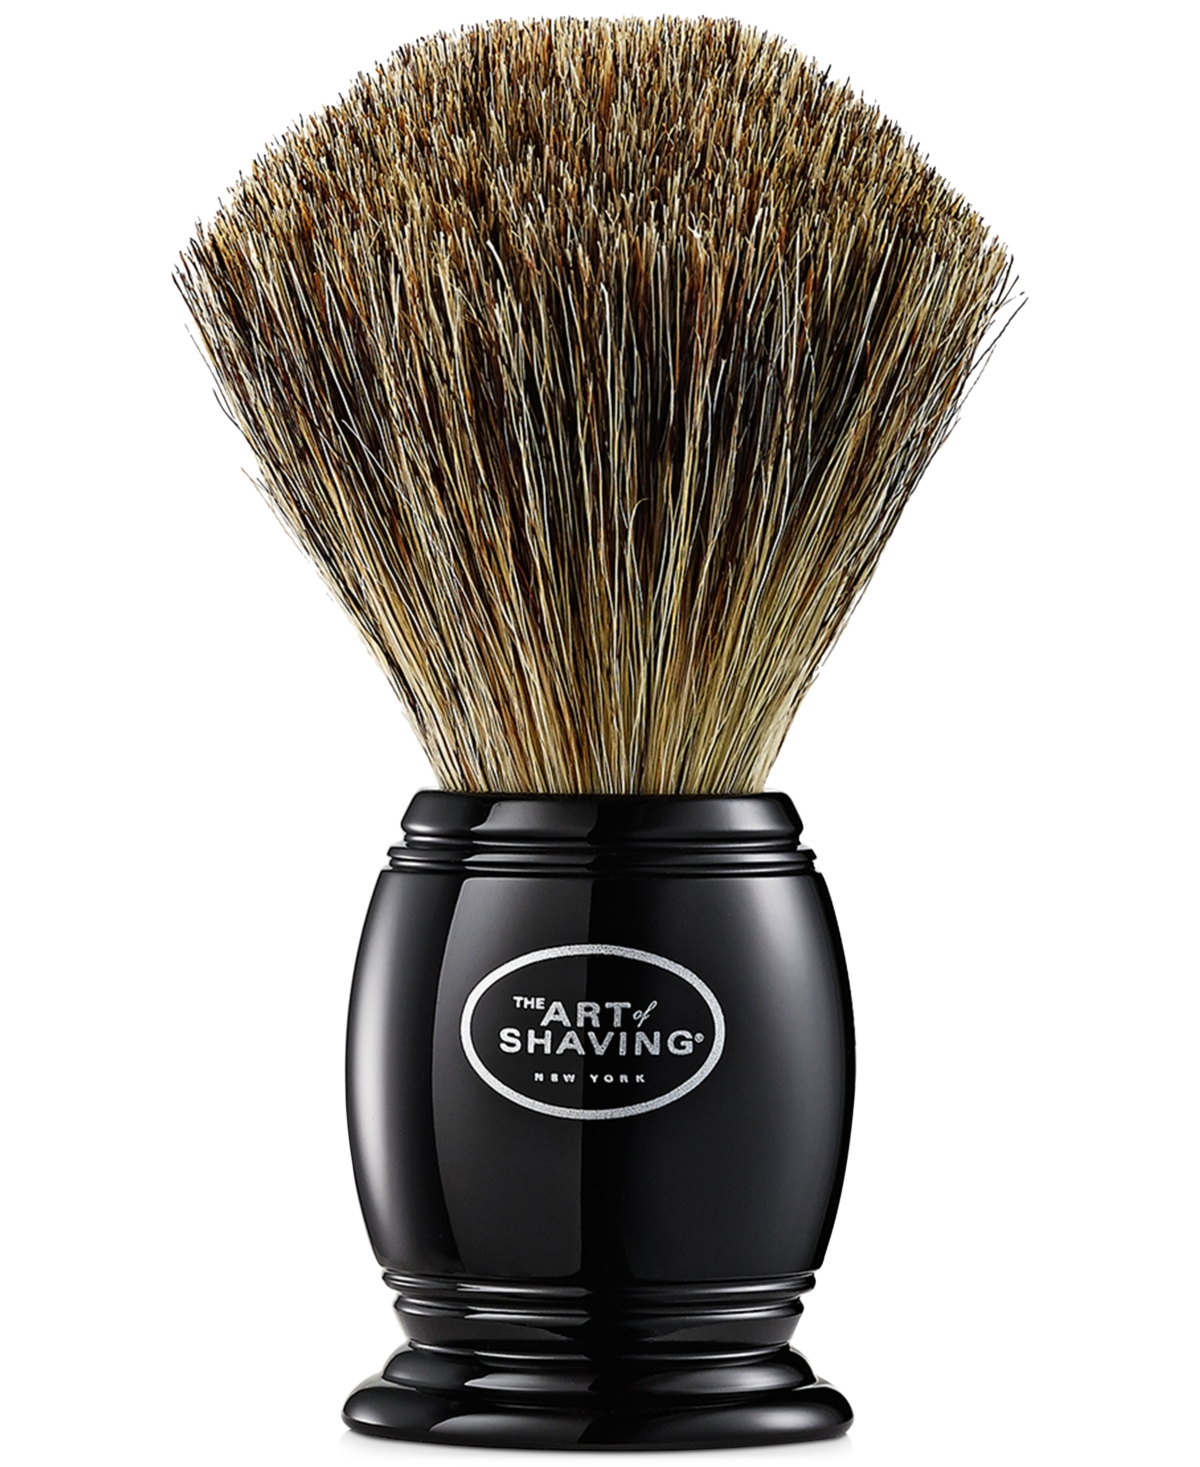 UPC 670535510642 product image for The Art of Shaving Pure Badger Shaving Brush, Black | upcitemdb.com